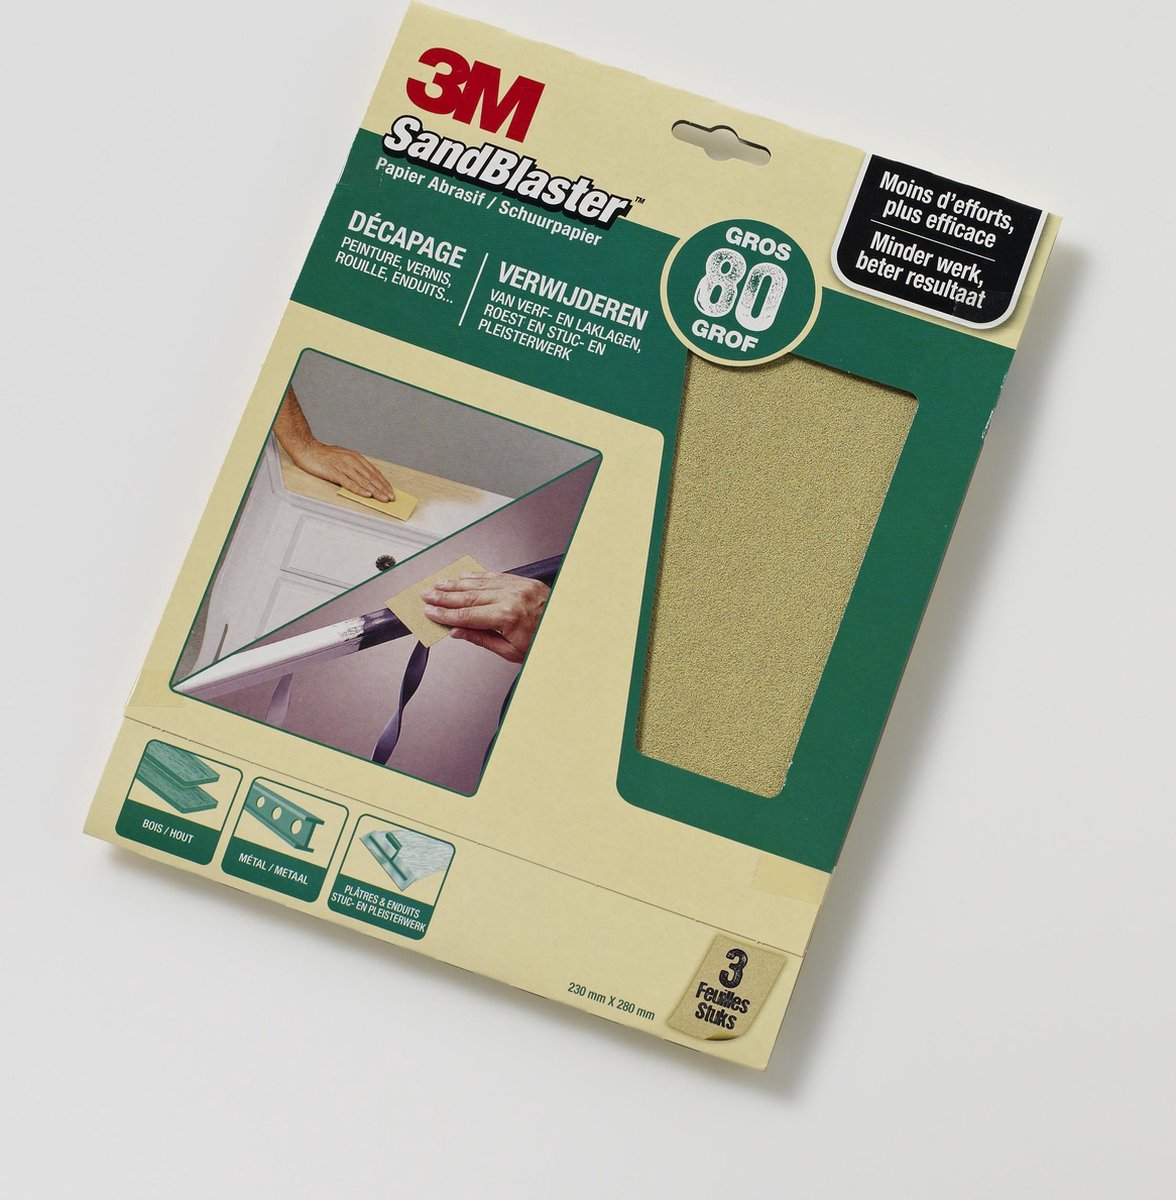 3M 60374 Sandblaster Schuurpapier Groen k80 - 3 st